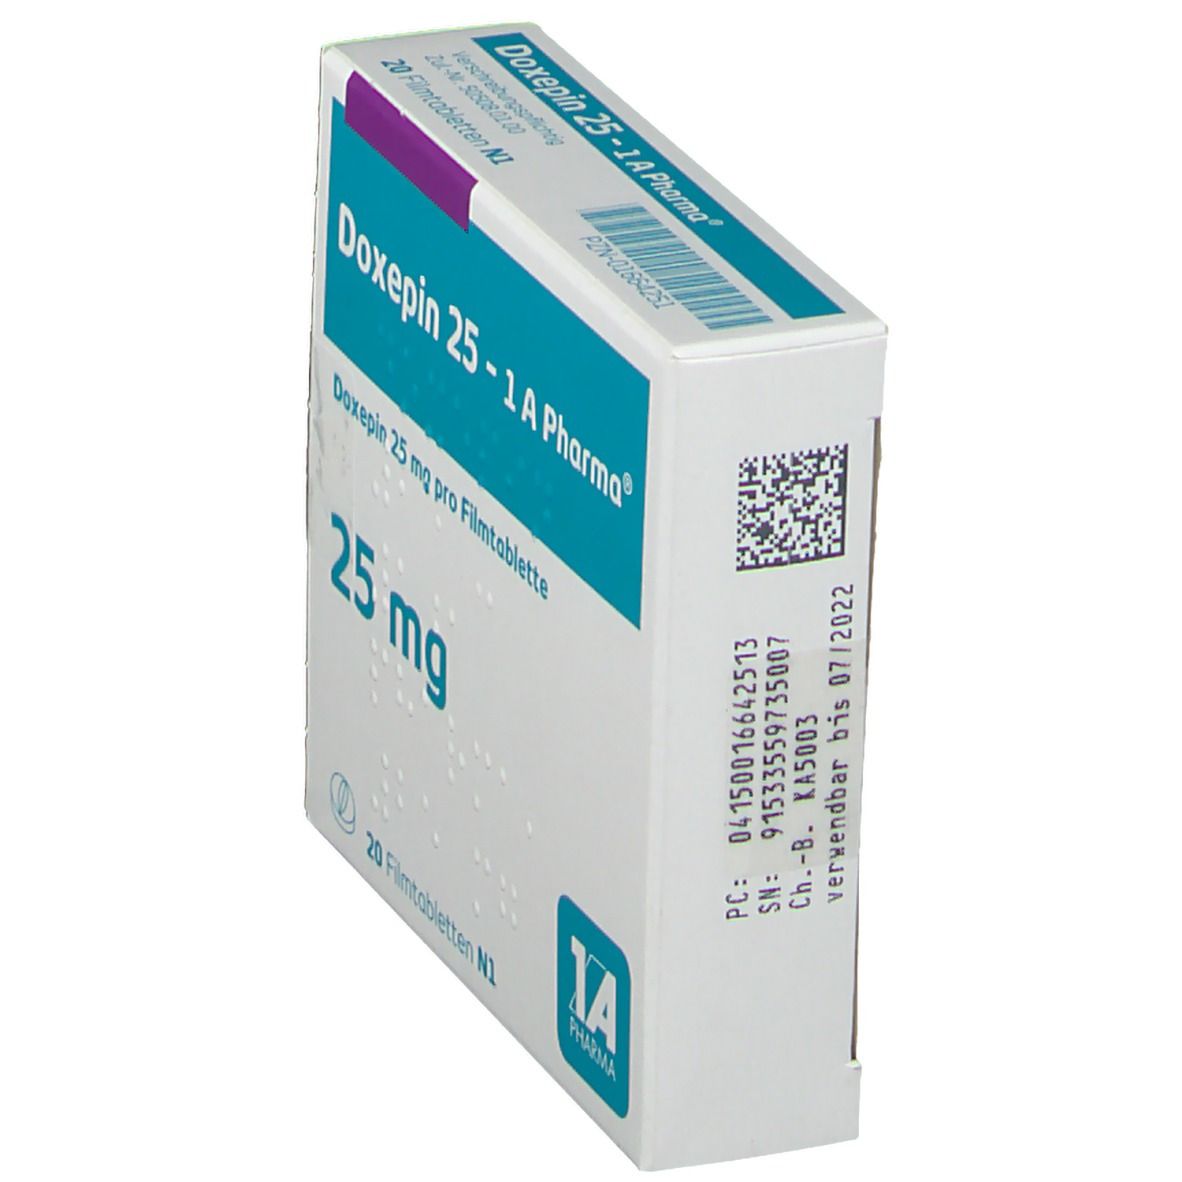 Doxepin 25 - 1 A Pharma®